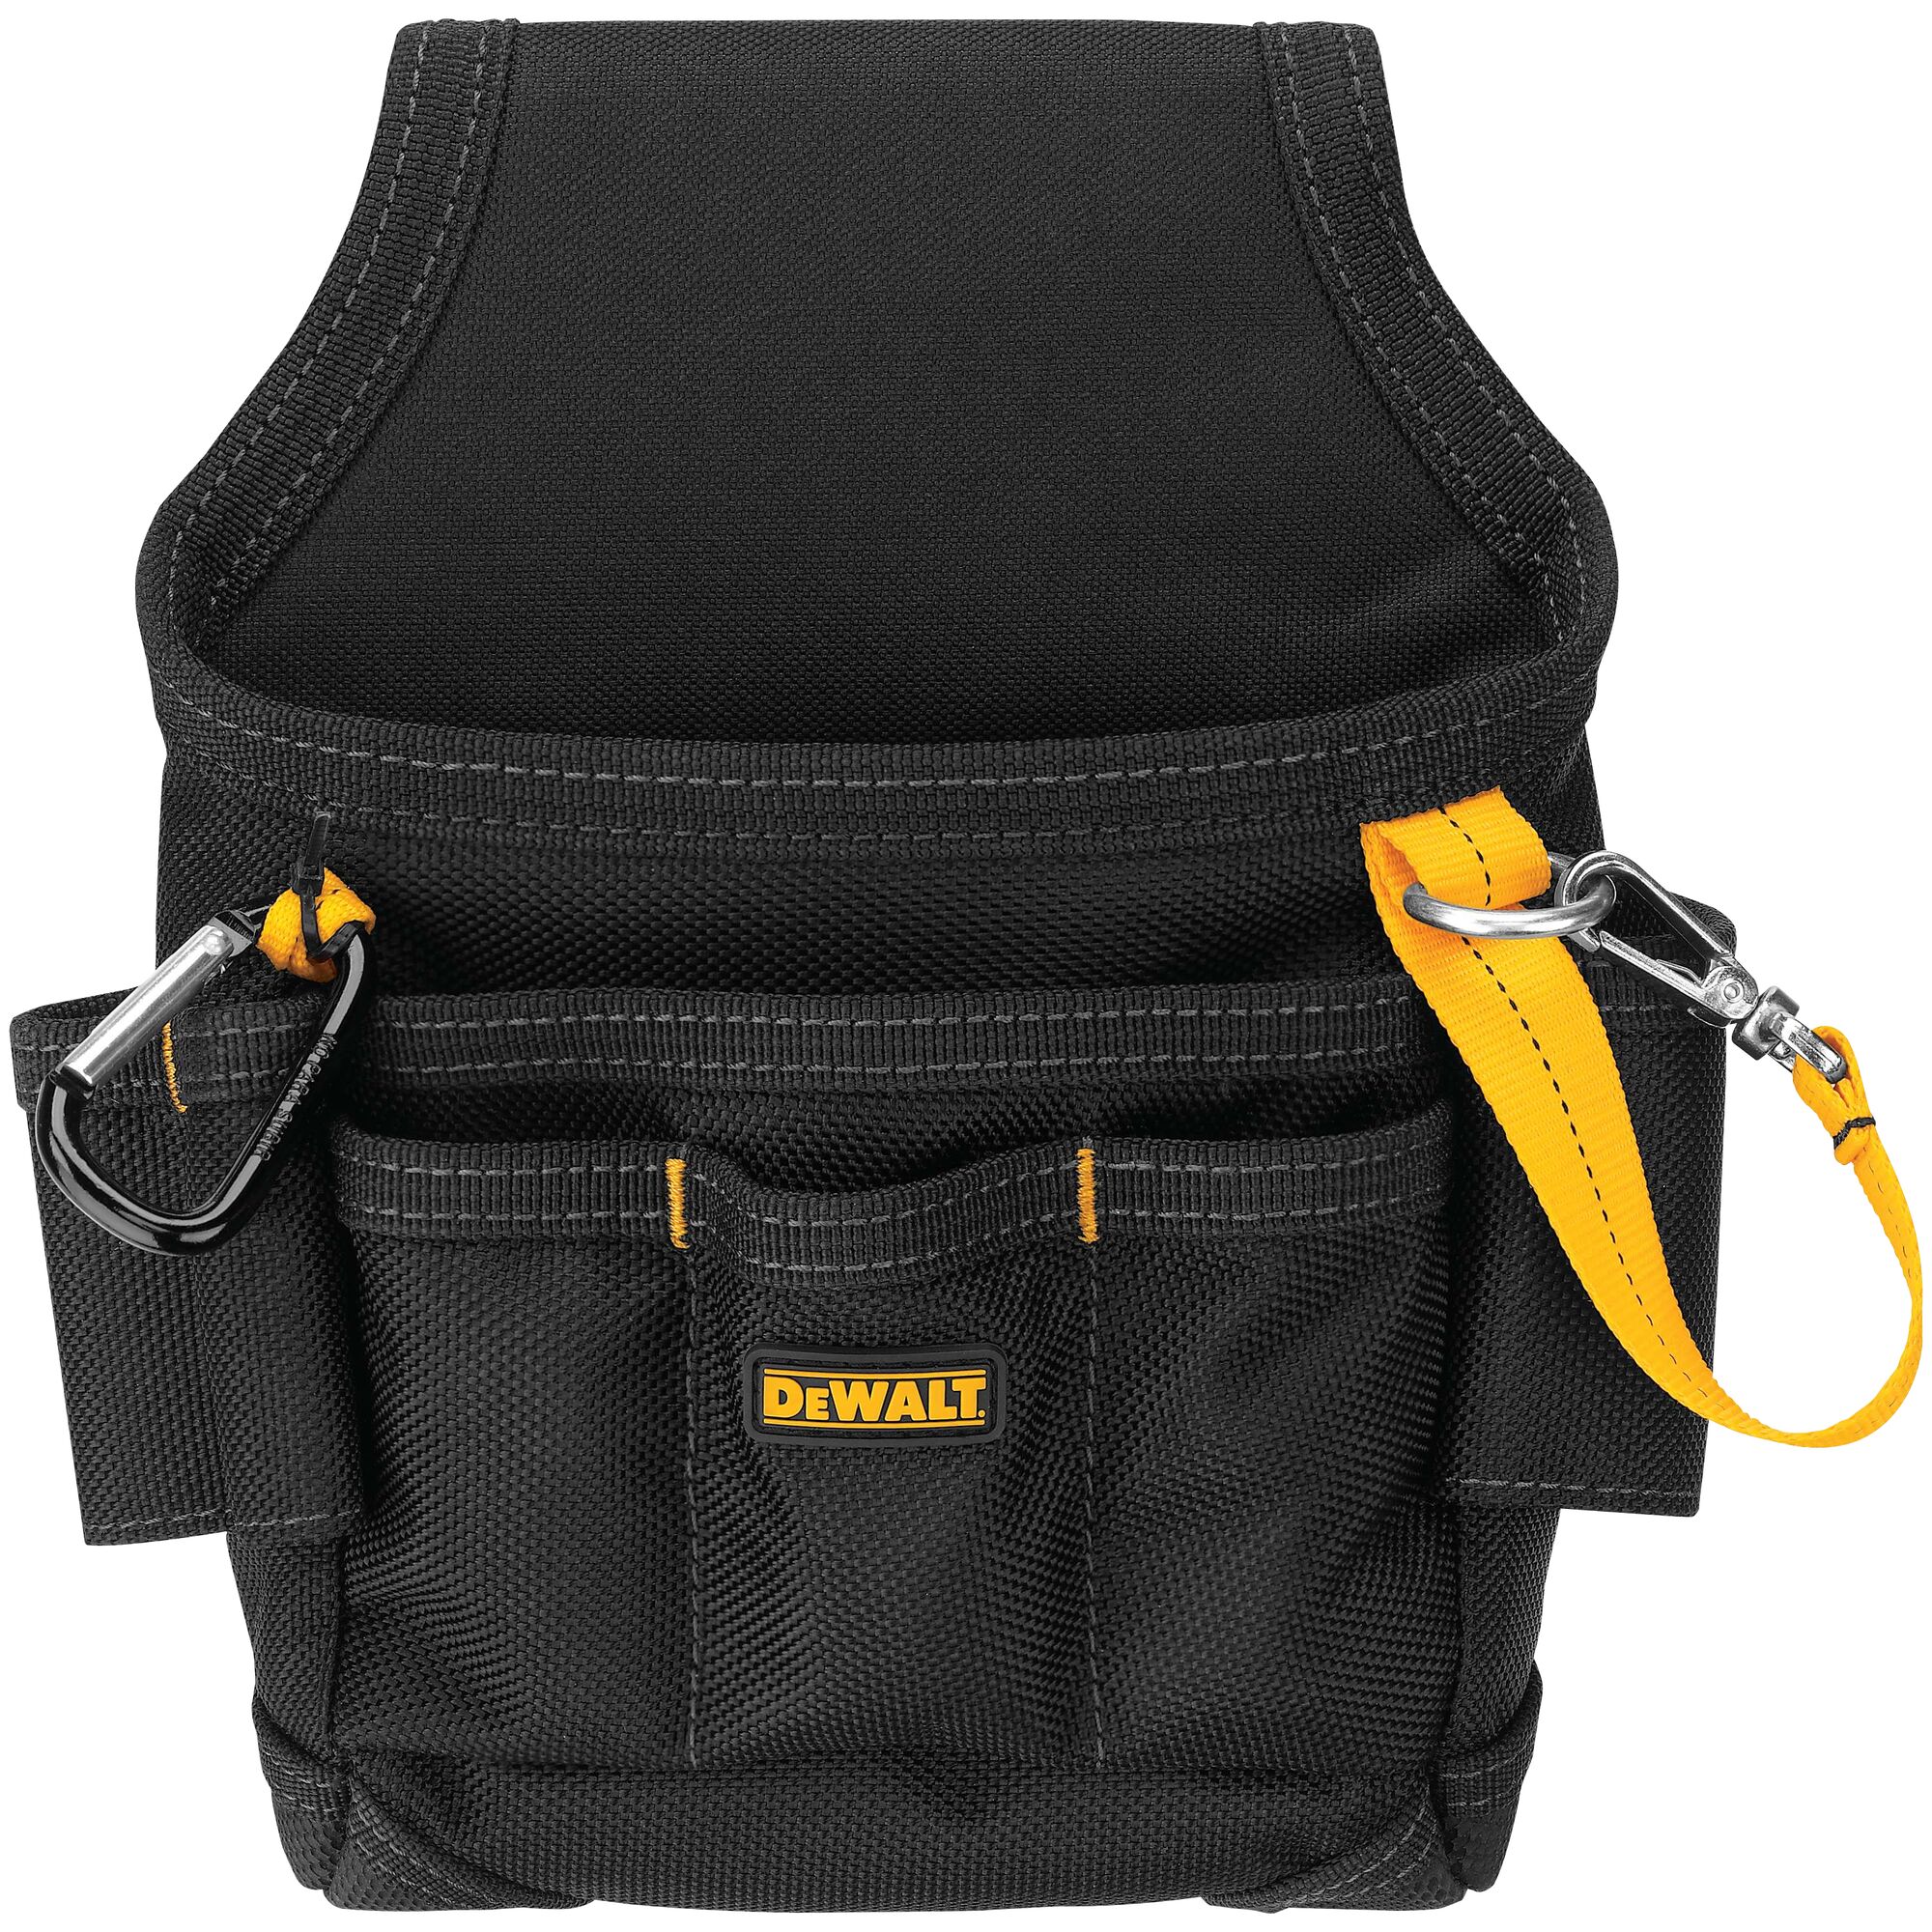 Dewalt DWST81396-8 Mobile Cellphone Pouch MAX Tool Bags Equipment Belt Works 